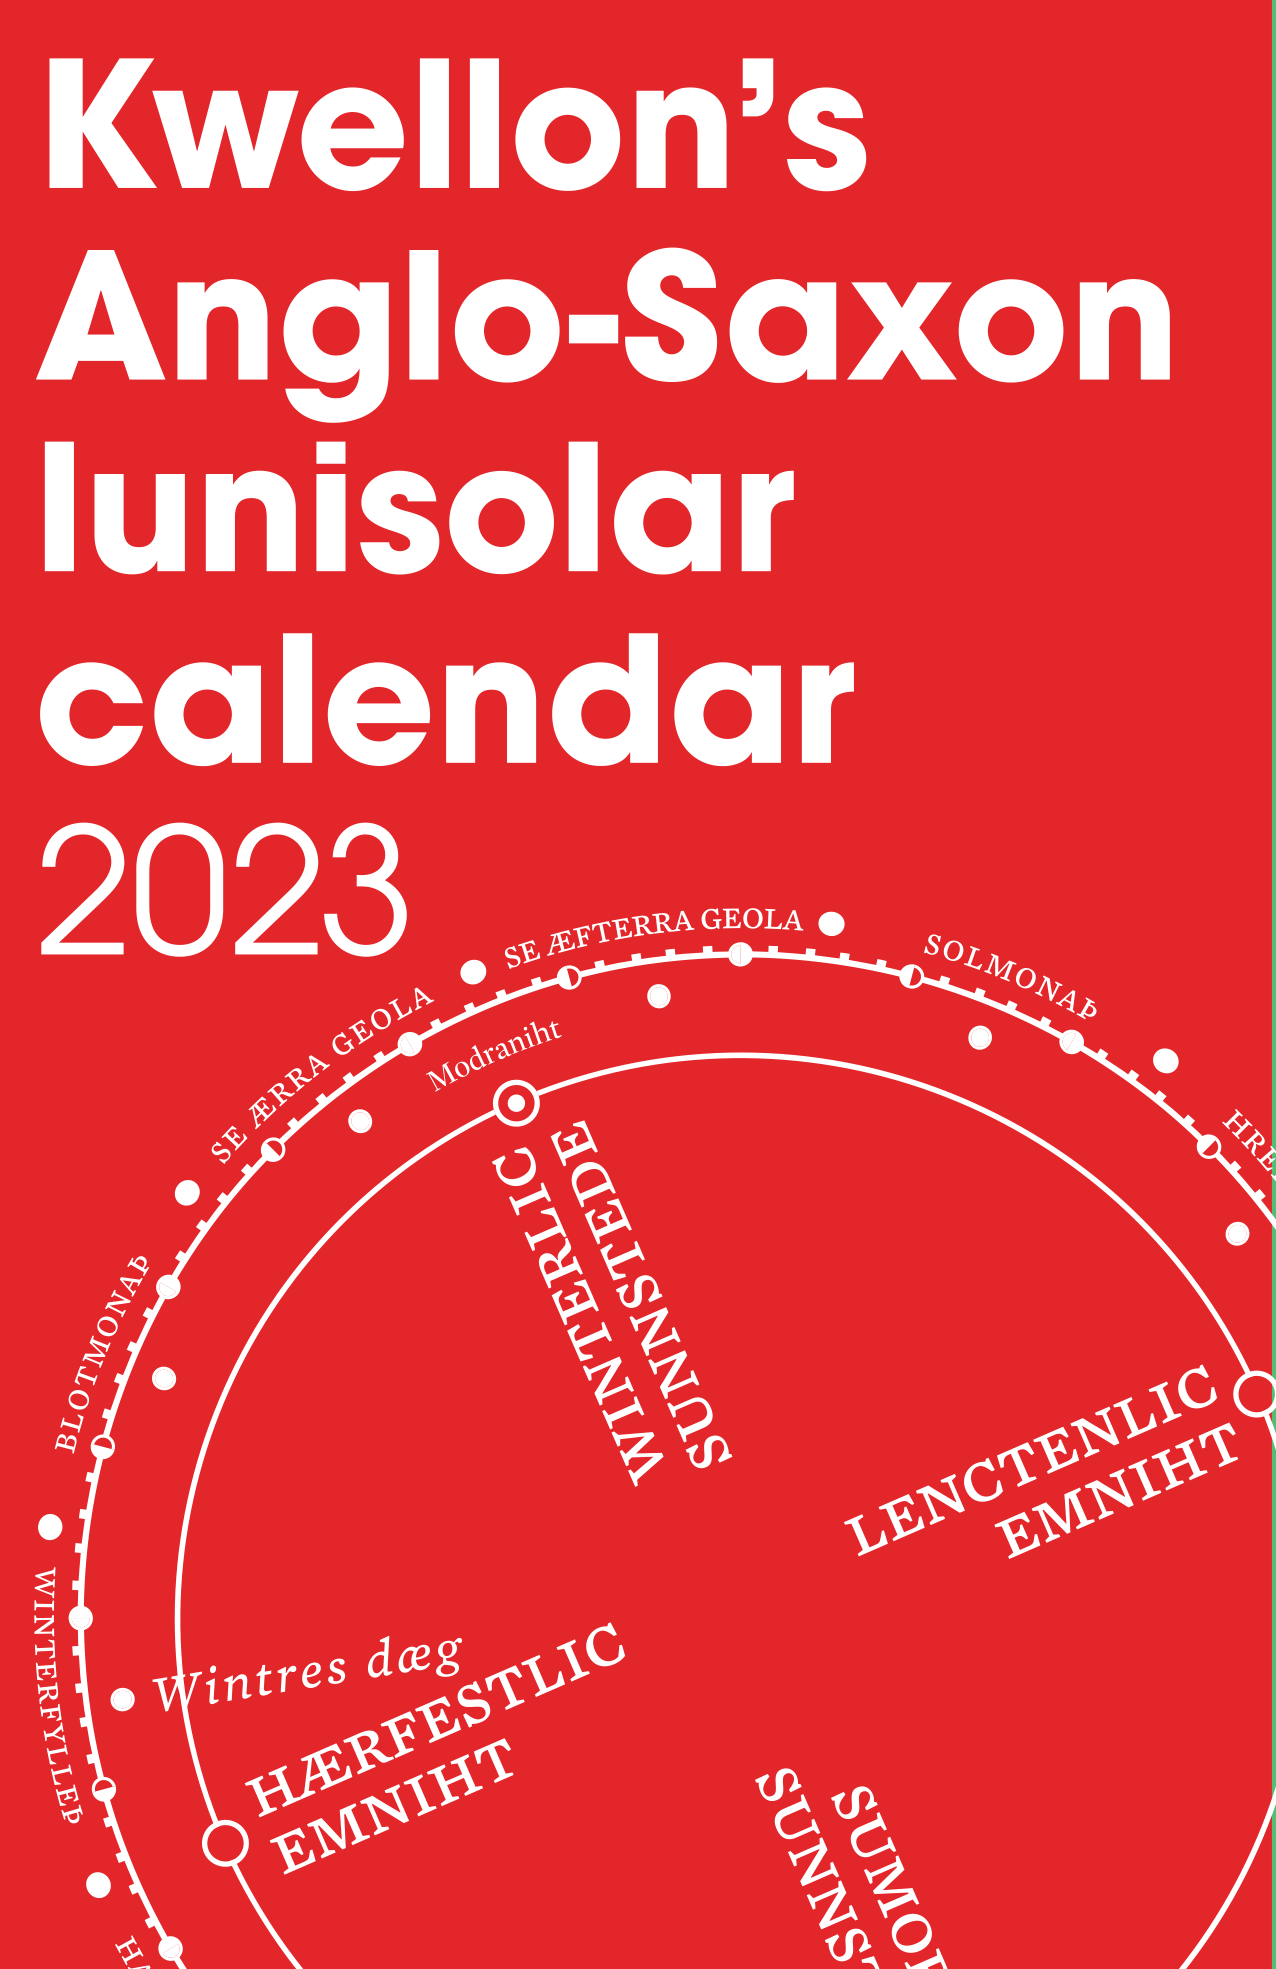 Kwellon’s Anglo-Saxon lunisolar calendar 2023